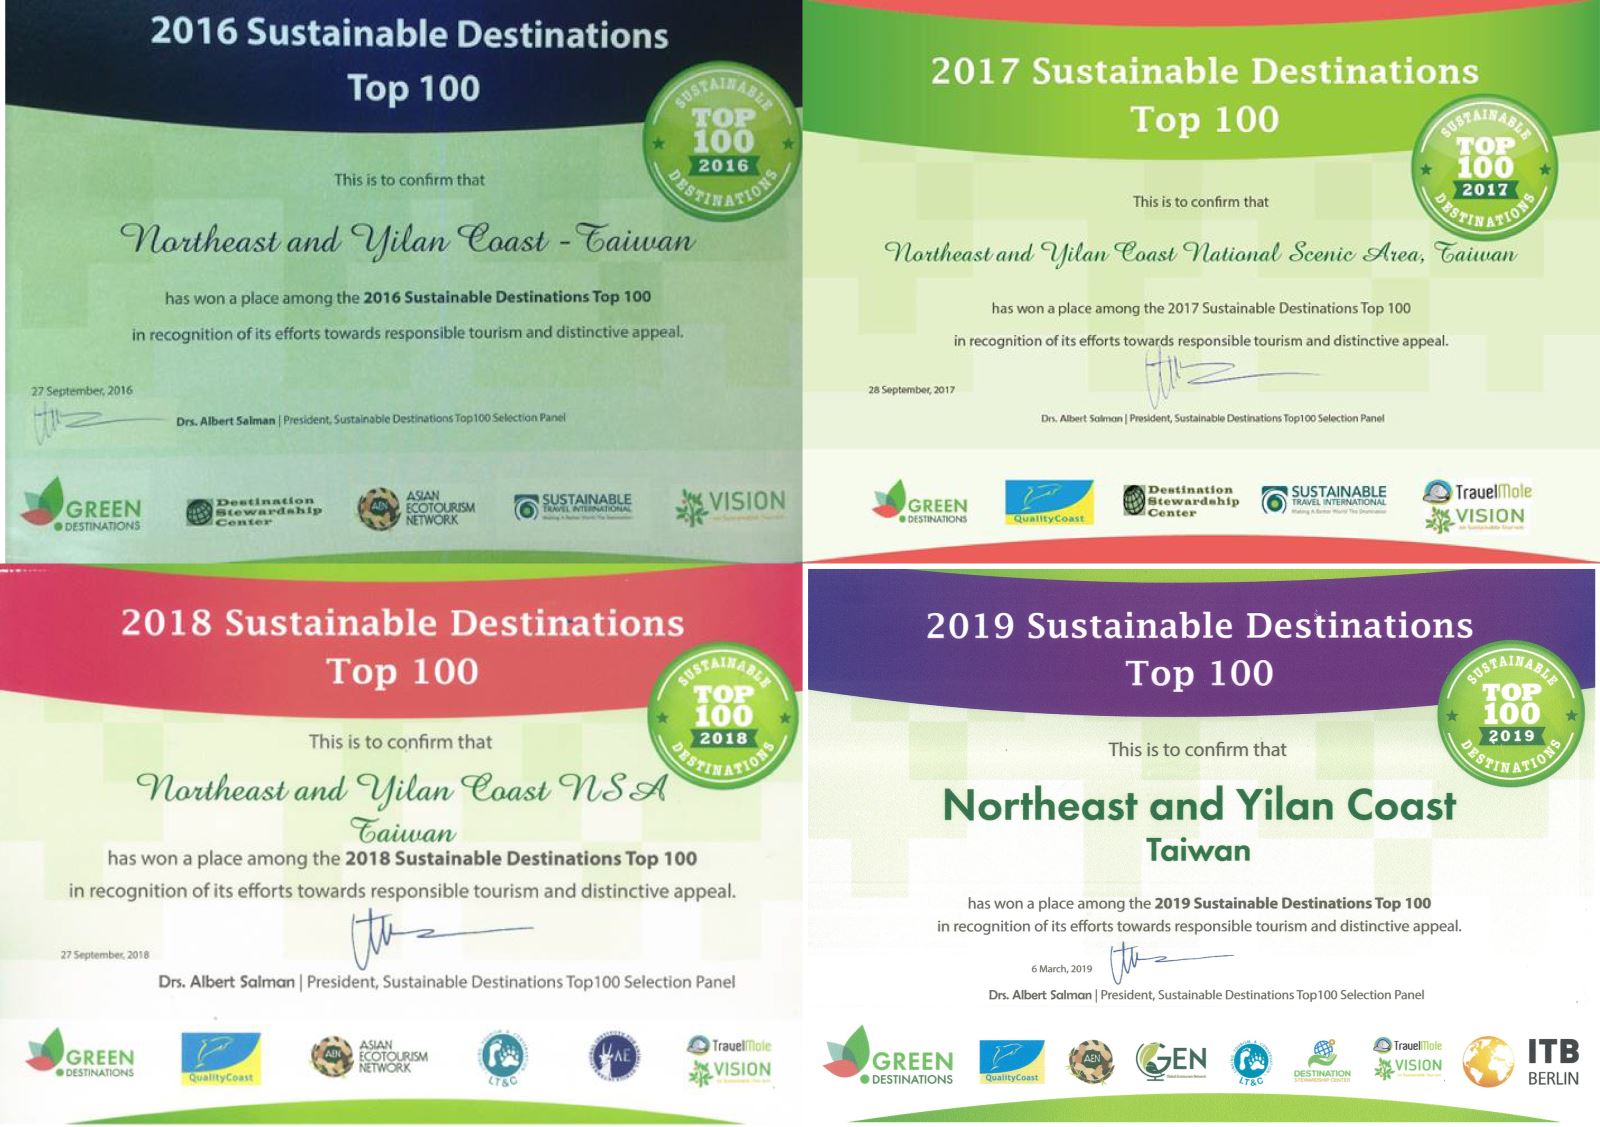 Green Destination Foundation TOP 100